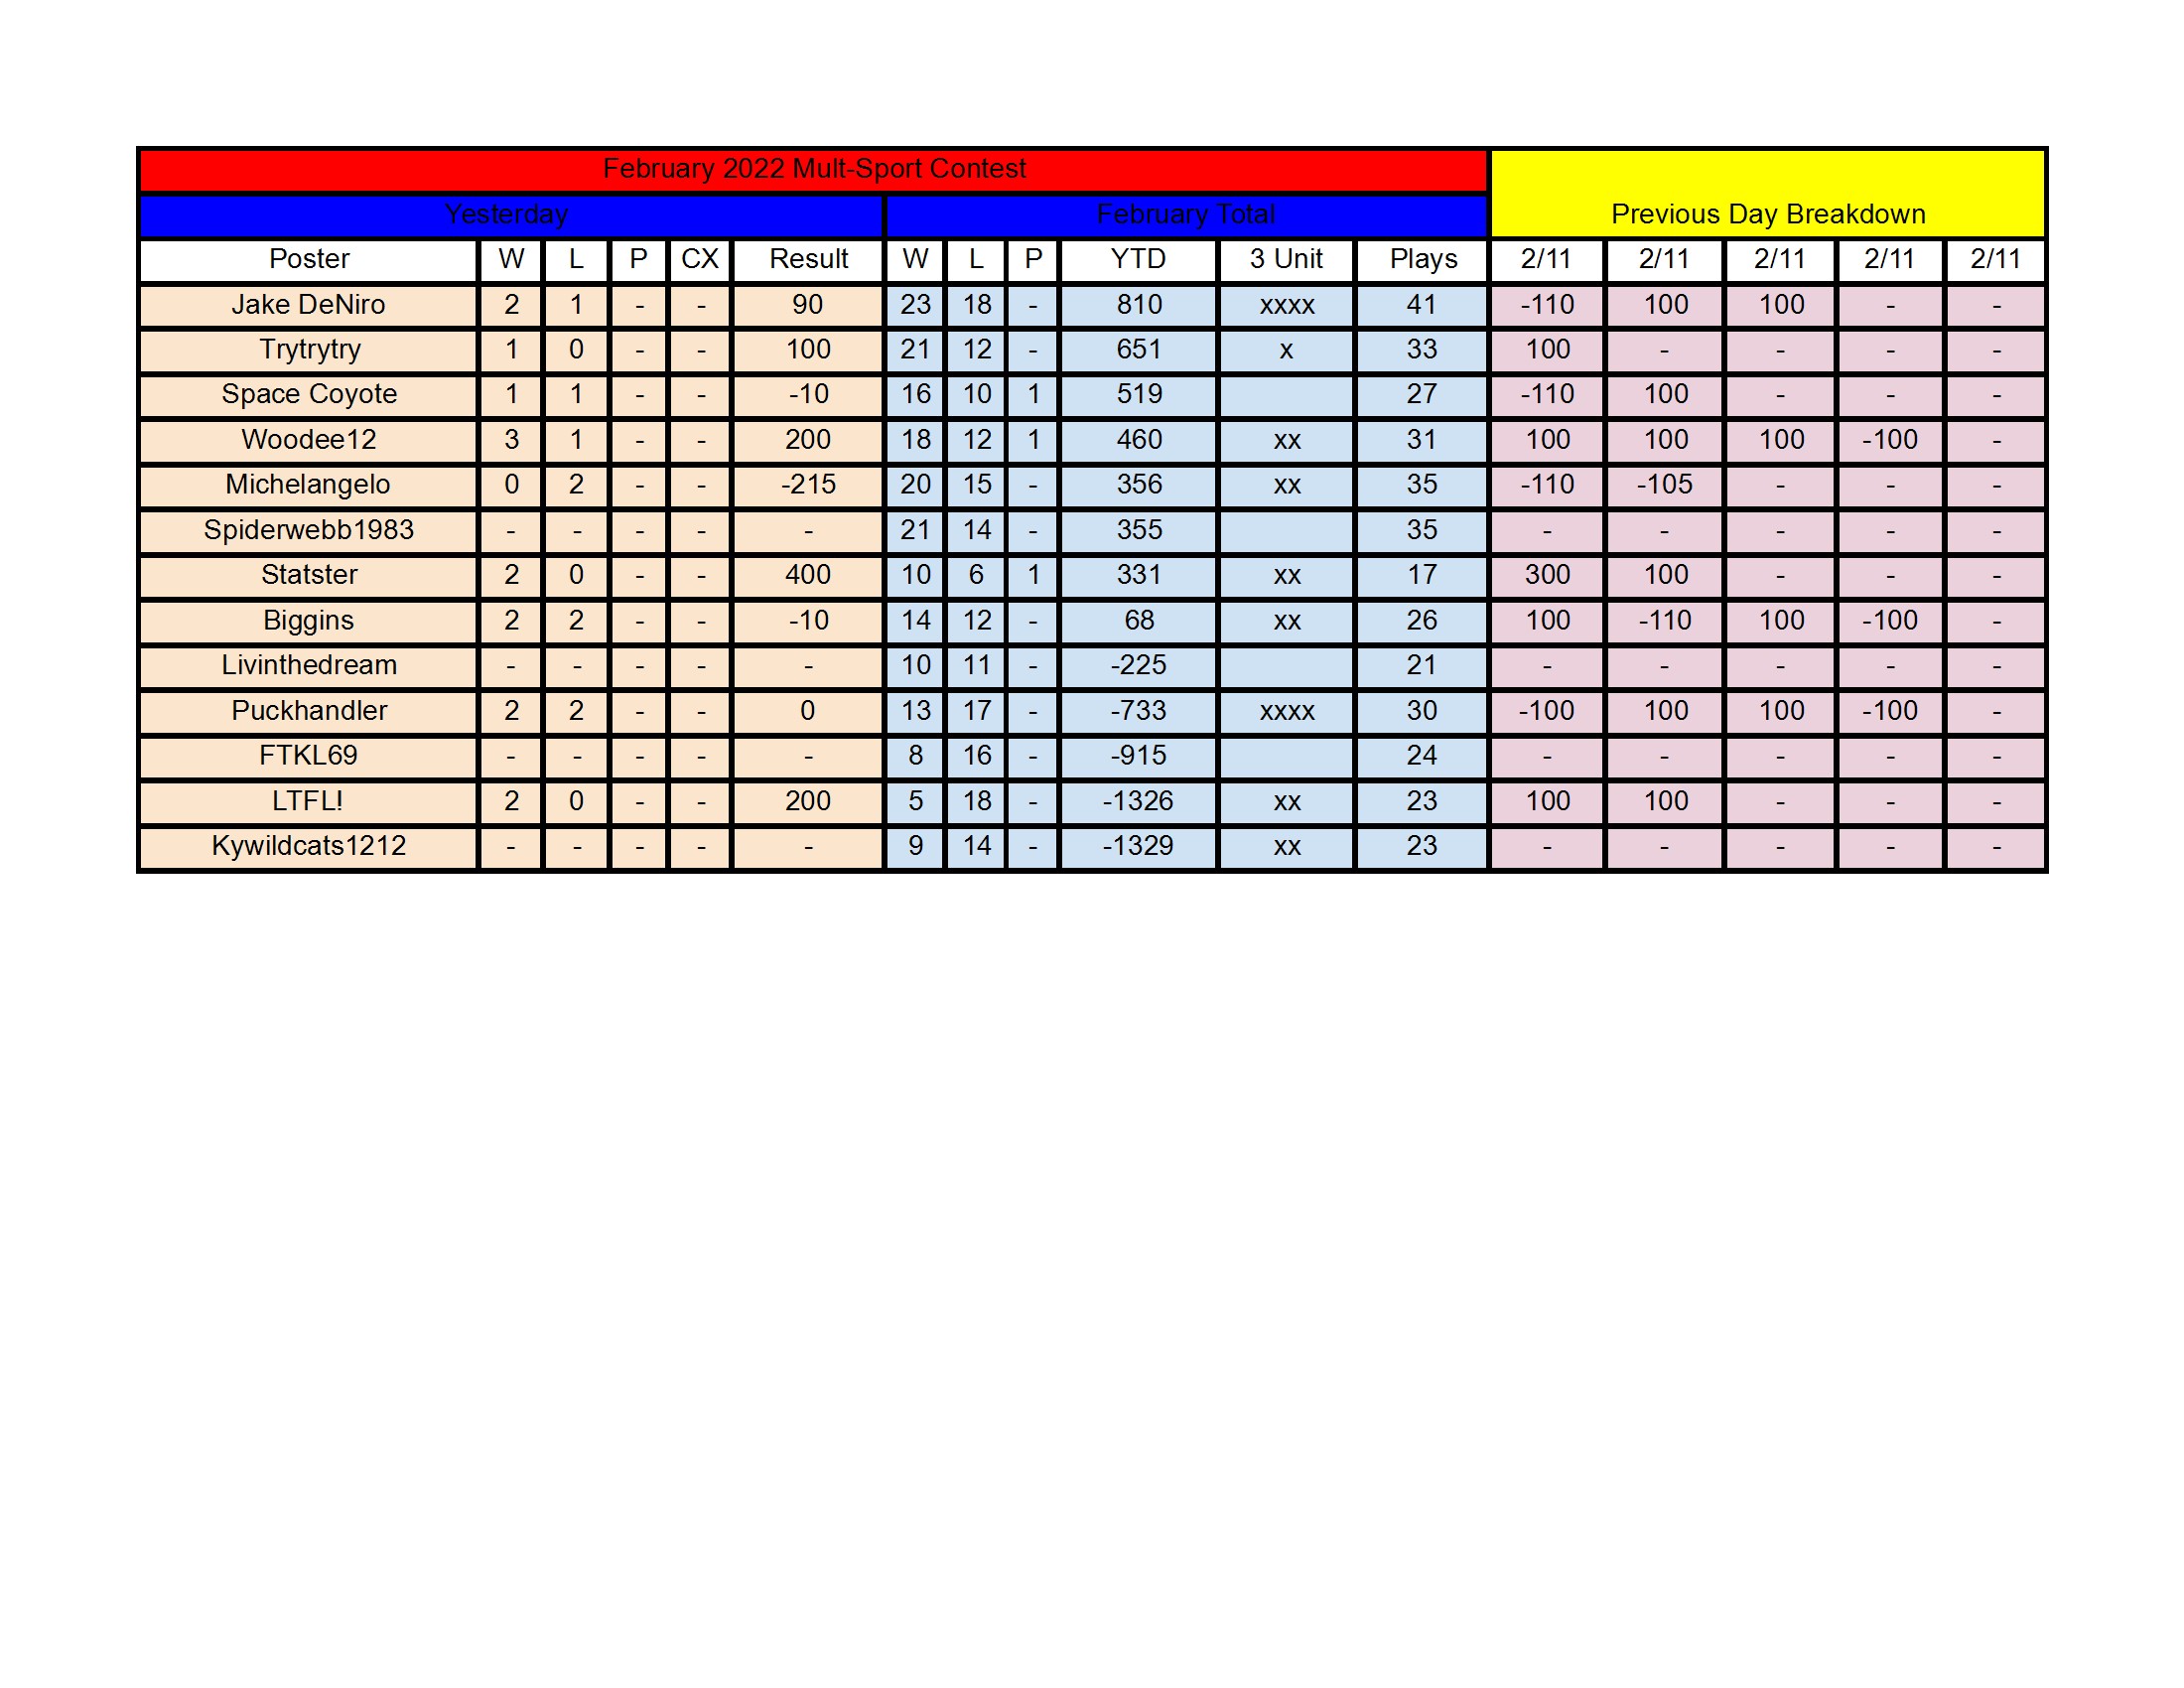 February Standings - 2_11 conv 1.jpeg